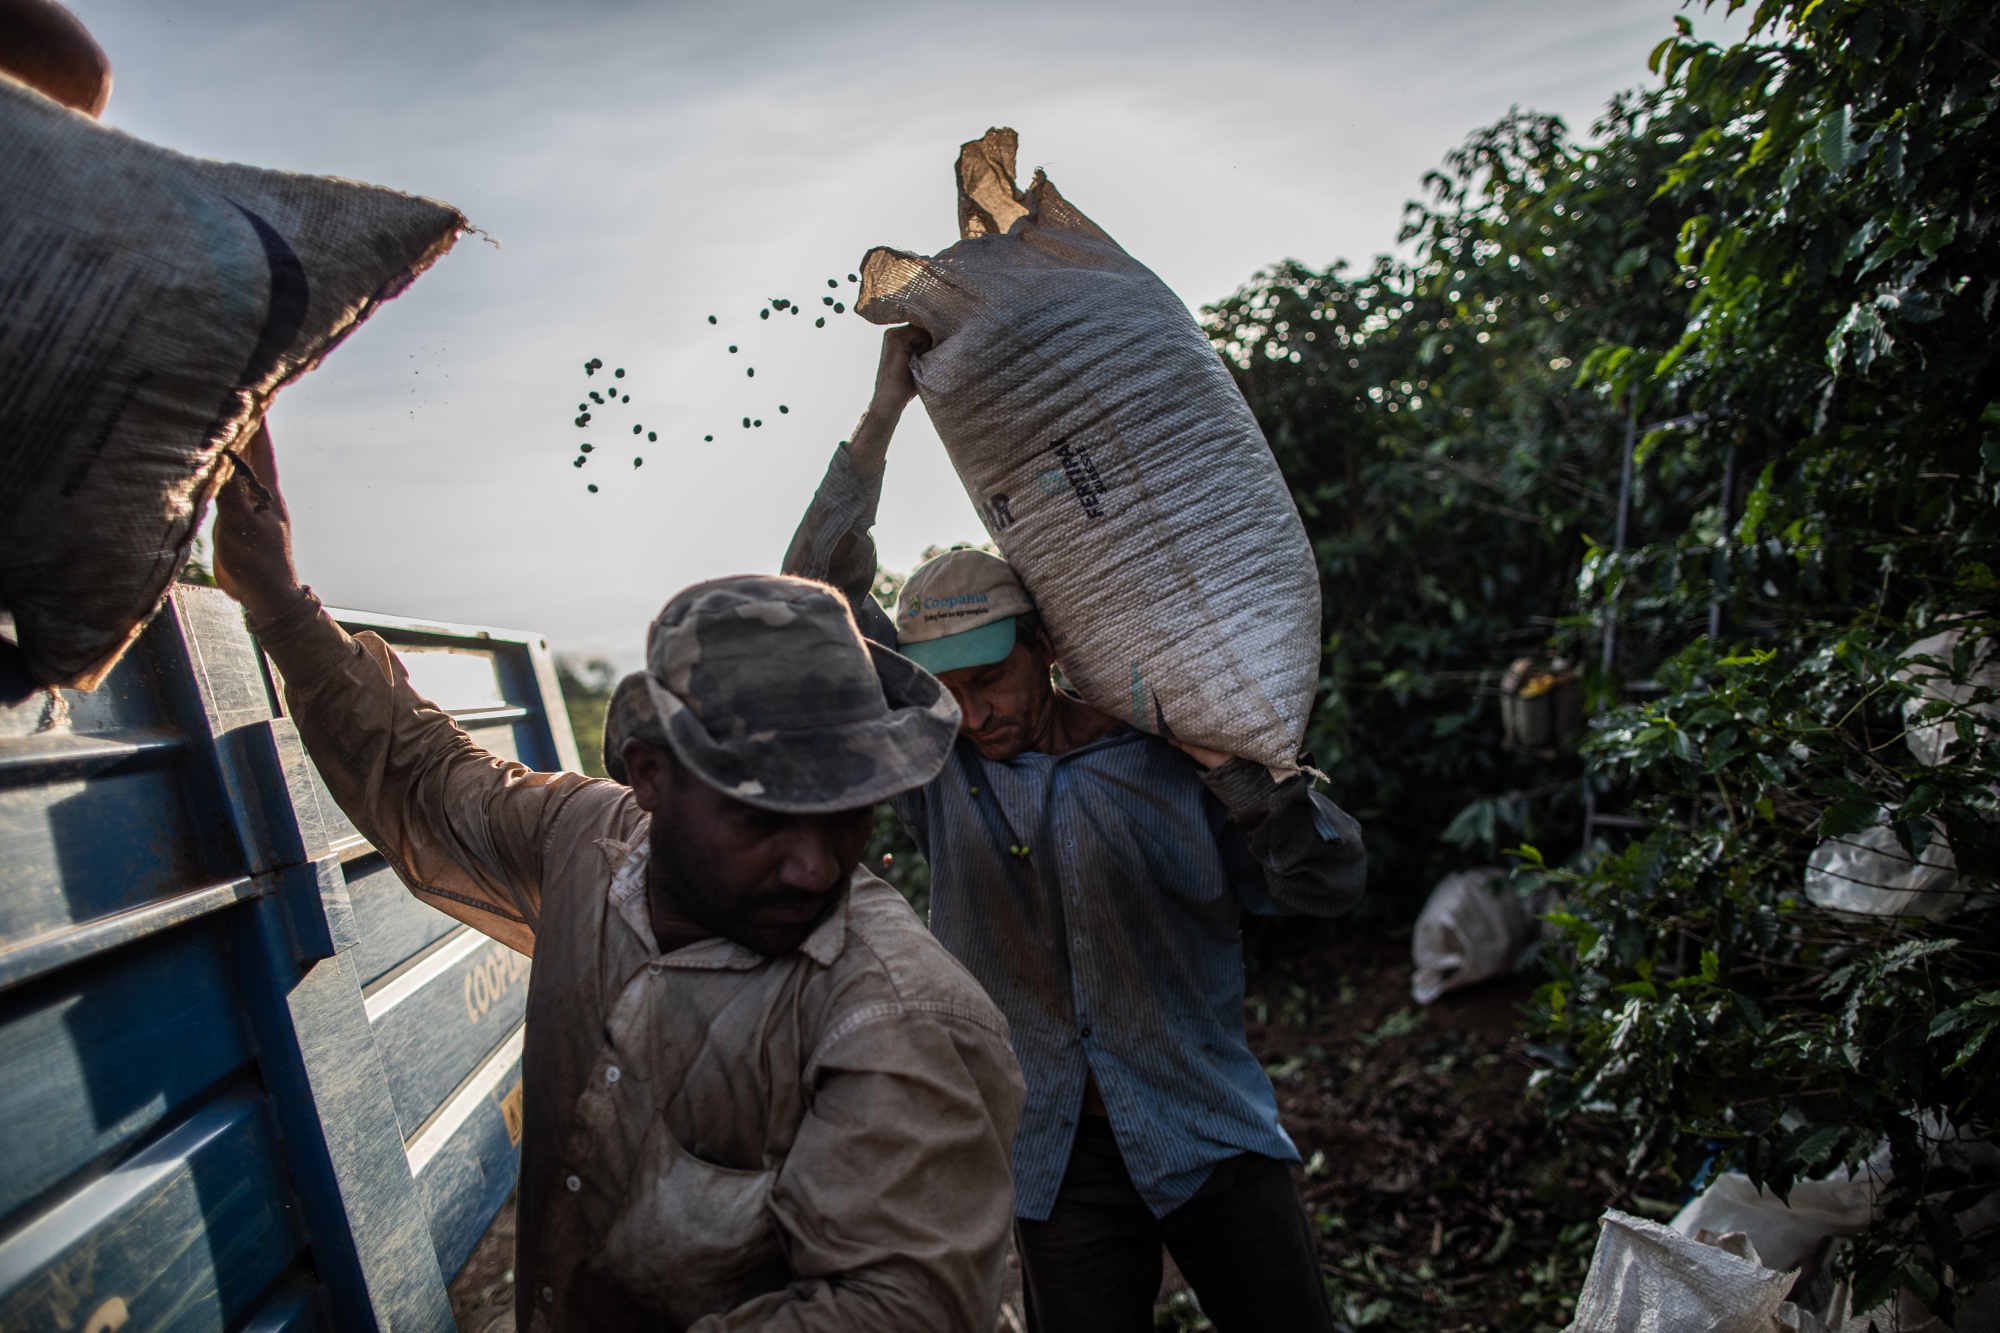 Workers harvest coffee on a farm in Machado, Minas Gerais state, Brazil, in 2019.